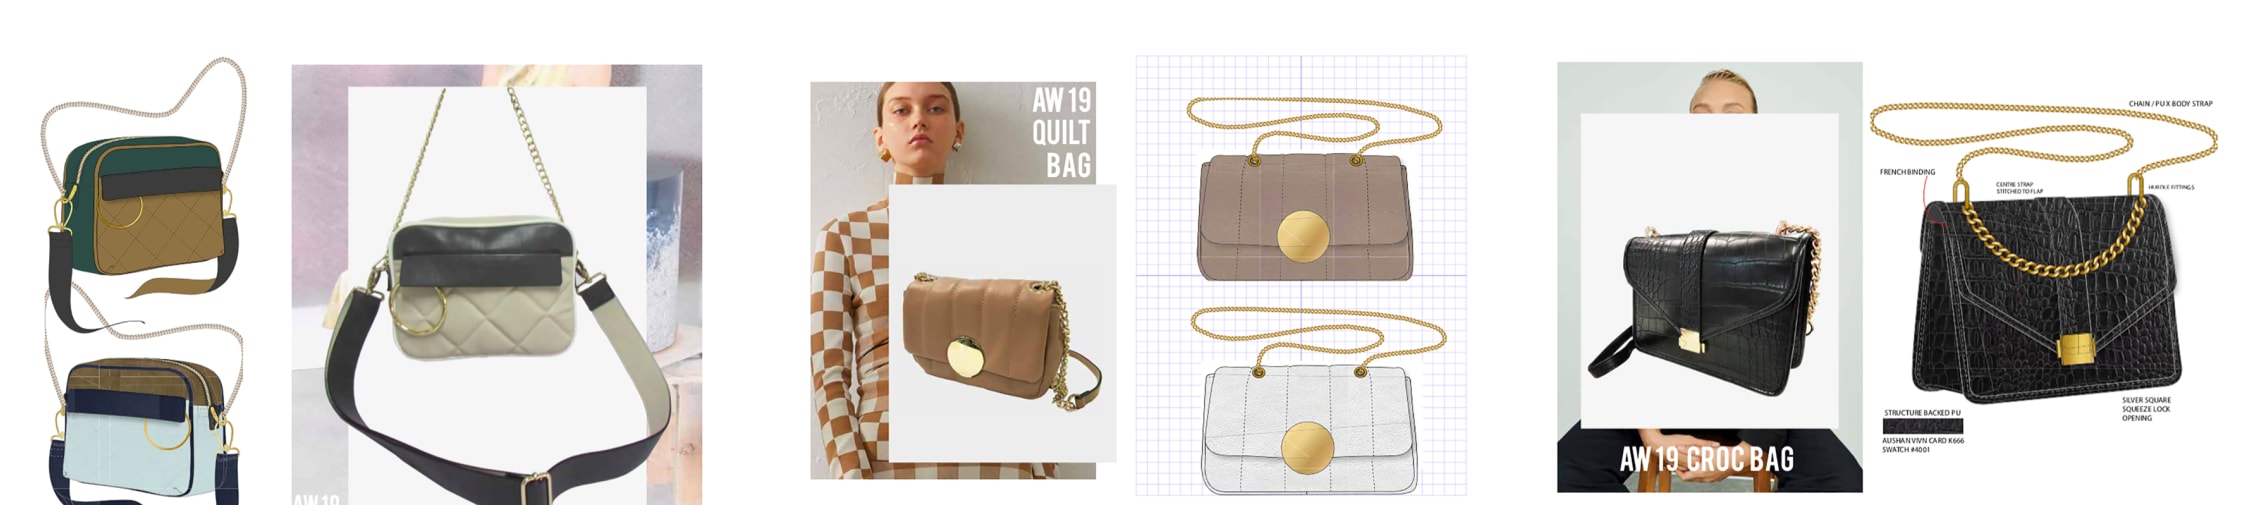 Collage of handbag design prototypes